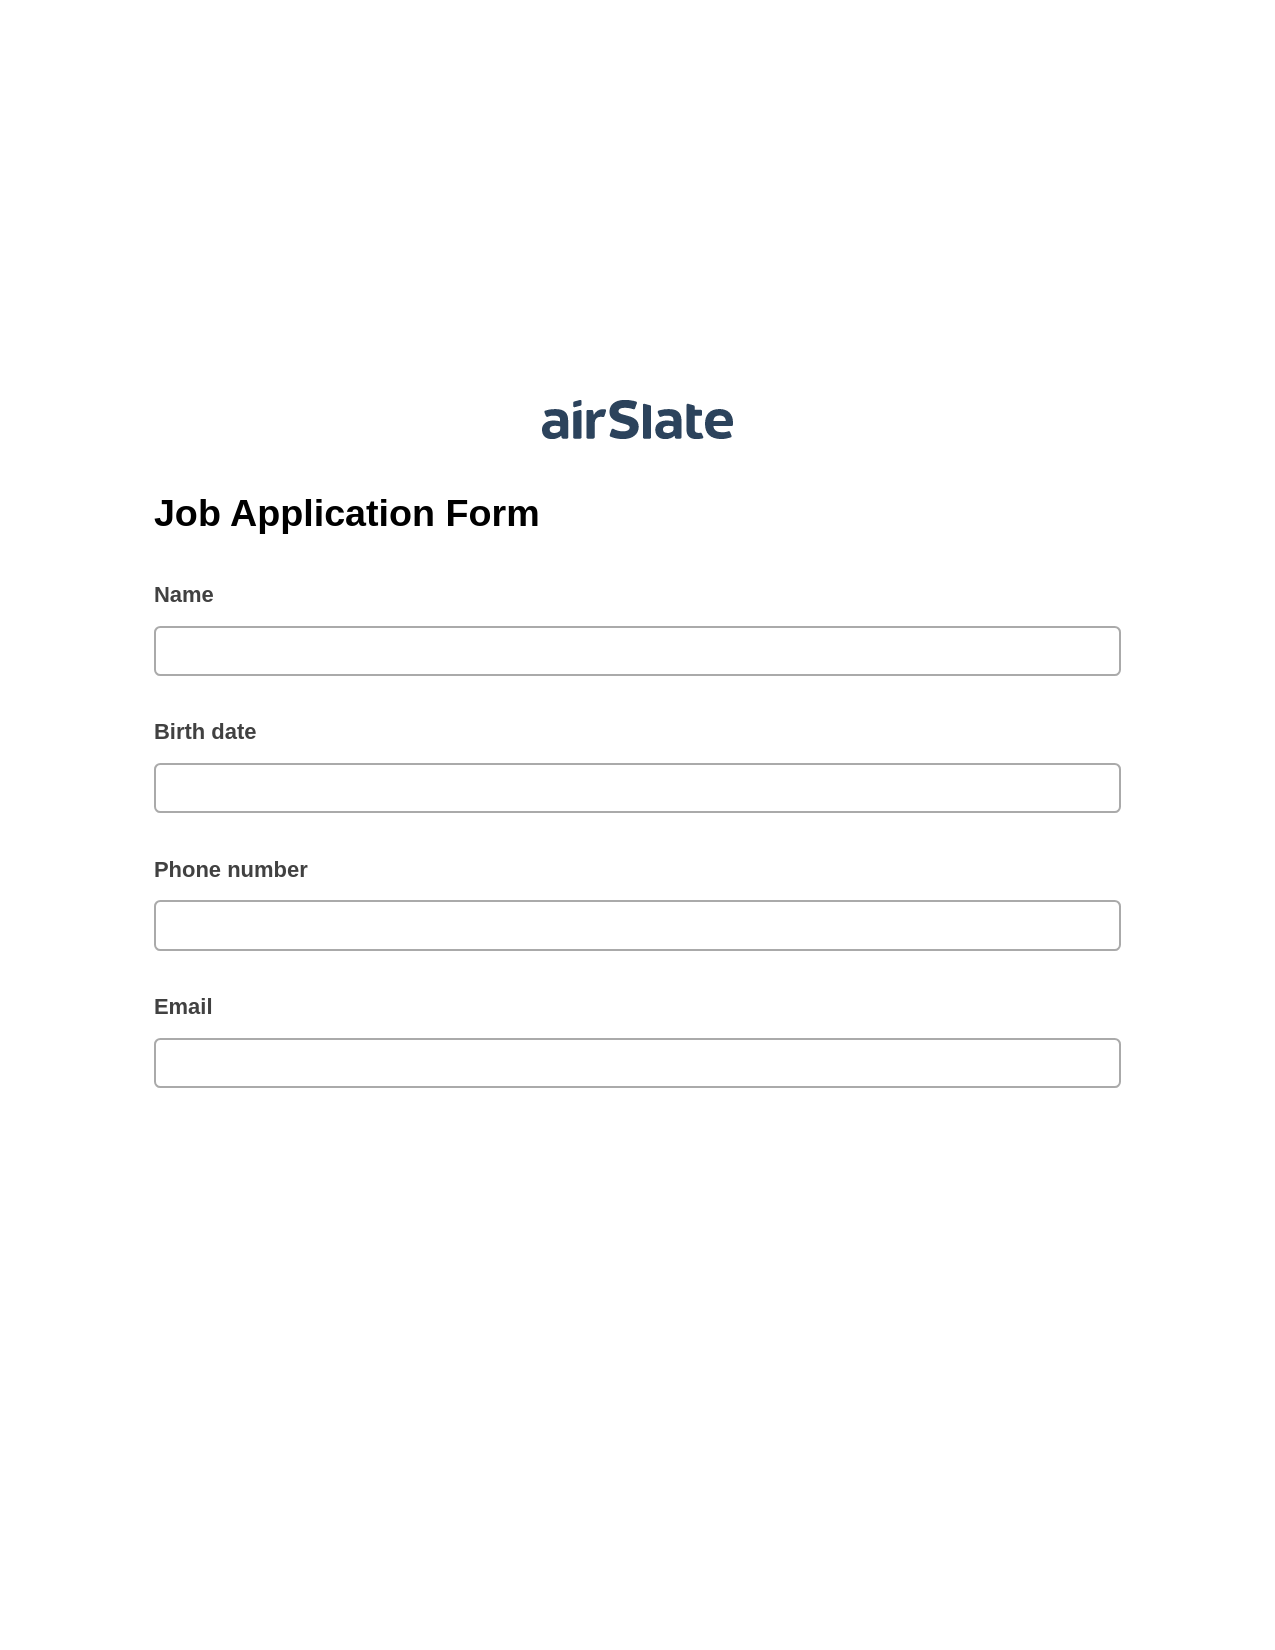 Multirole Job Application Form Pre-fill Dropdowns from Office 365 Excel Bot, Revoke Access Bot, Google Drive Bot